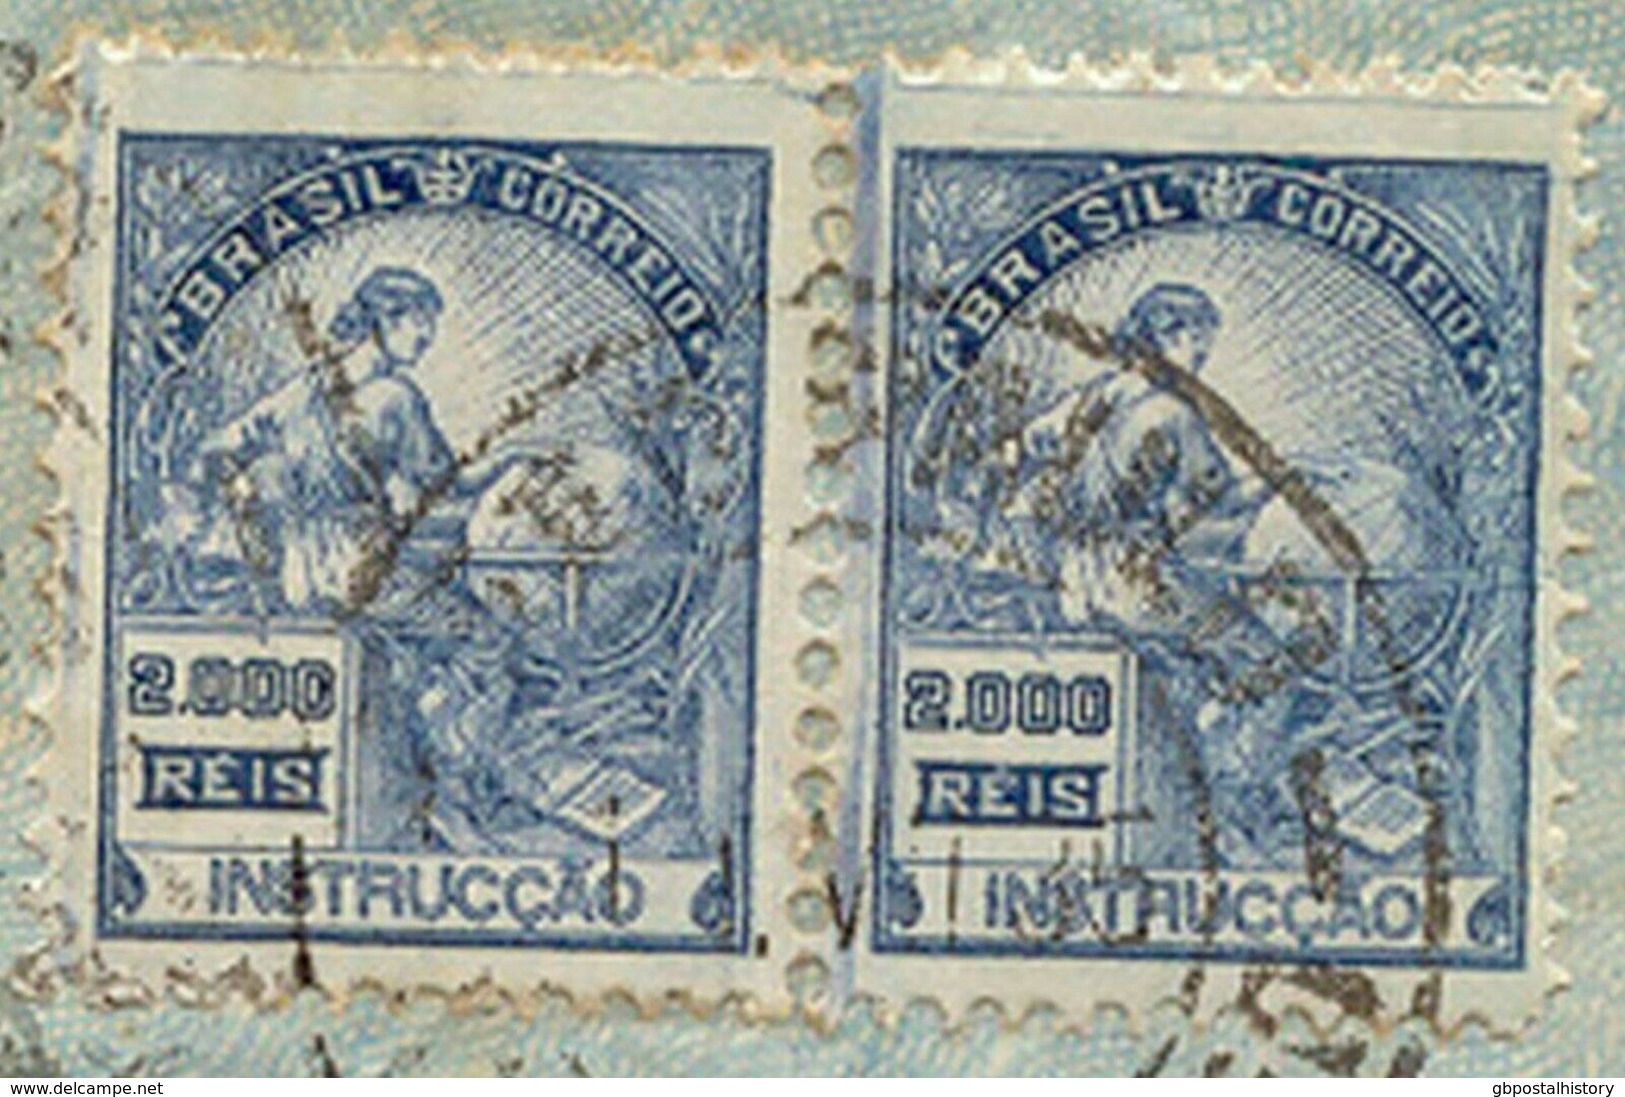 BRAZIL 1935 200 R + 2000 R (2x VARIETIES) SAO PAULO To BERLIN Airmail Via CONDOR - Airmail